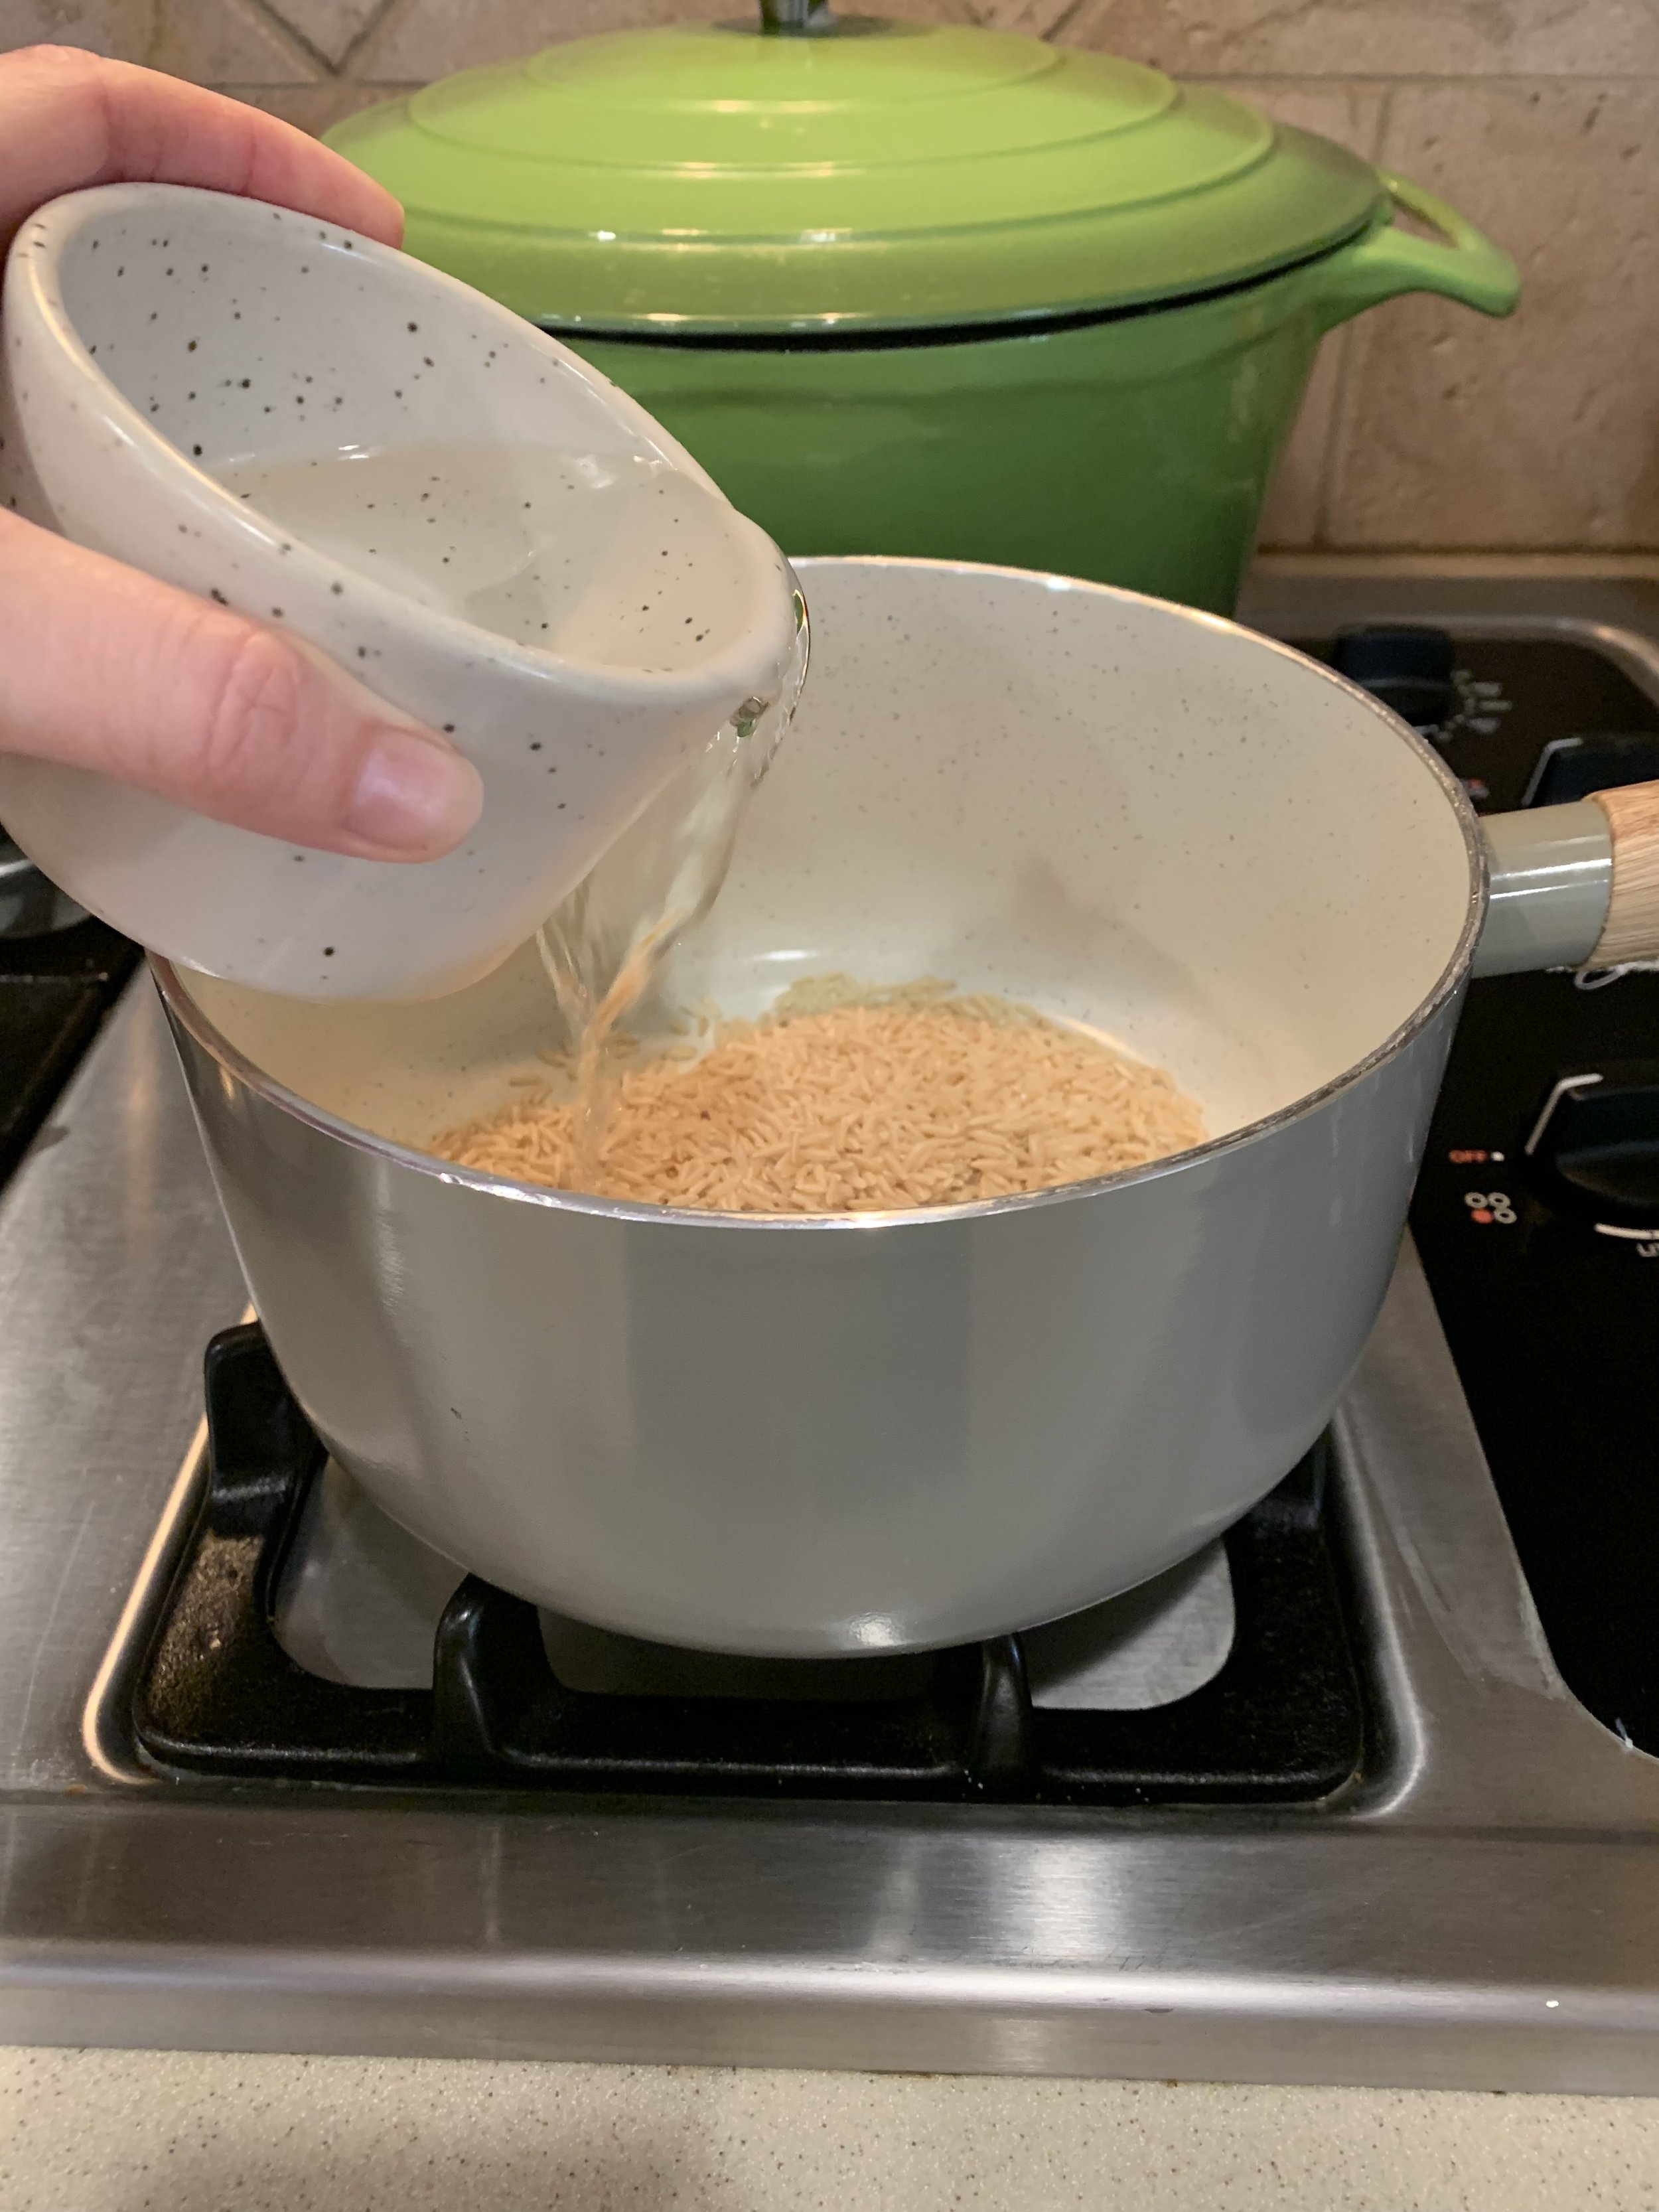 Starting the rice